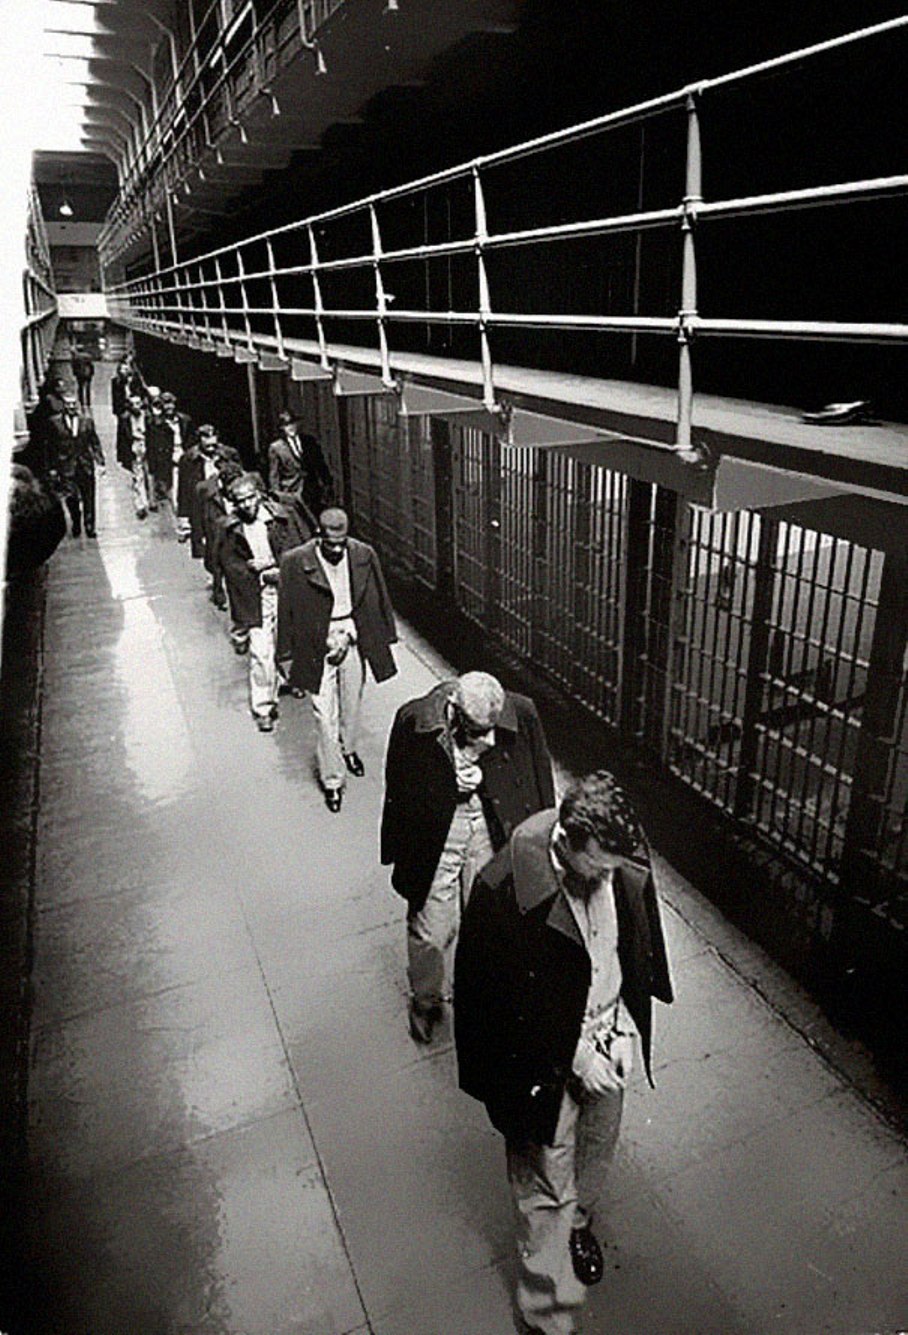 8. The Leaving of Last Prisoners from Alcatraz, 1963